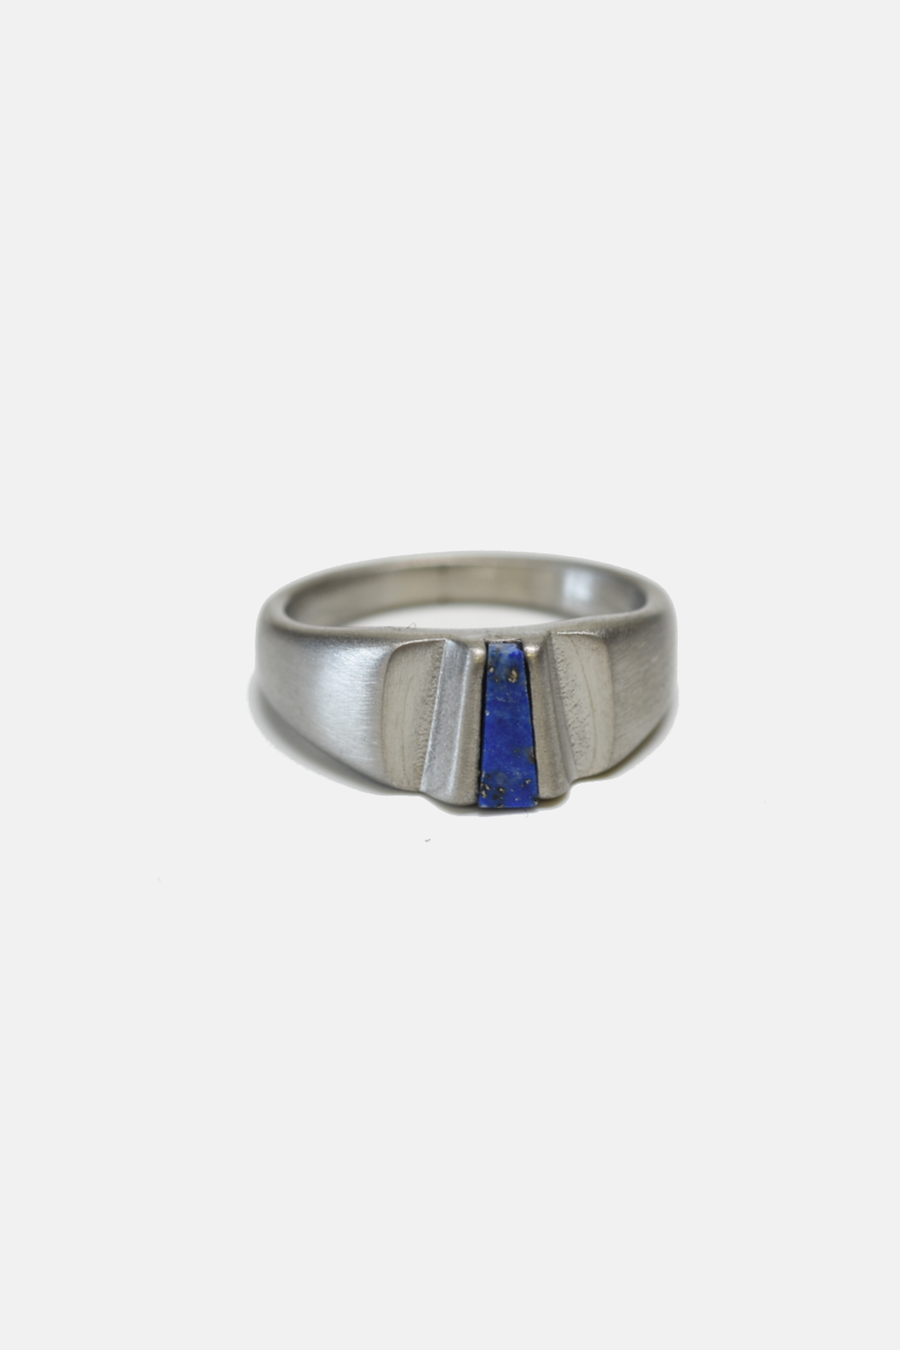 Lapis Lazuli Inlay Ring: 10